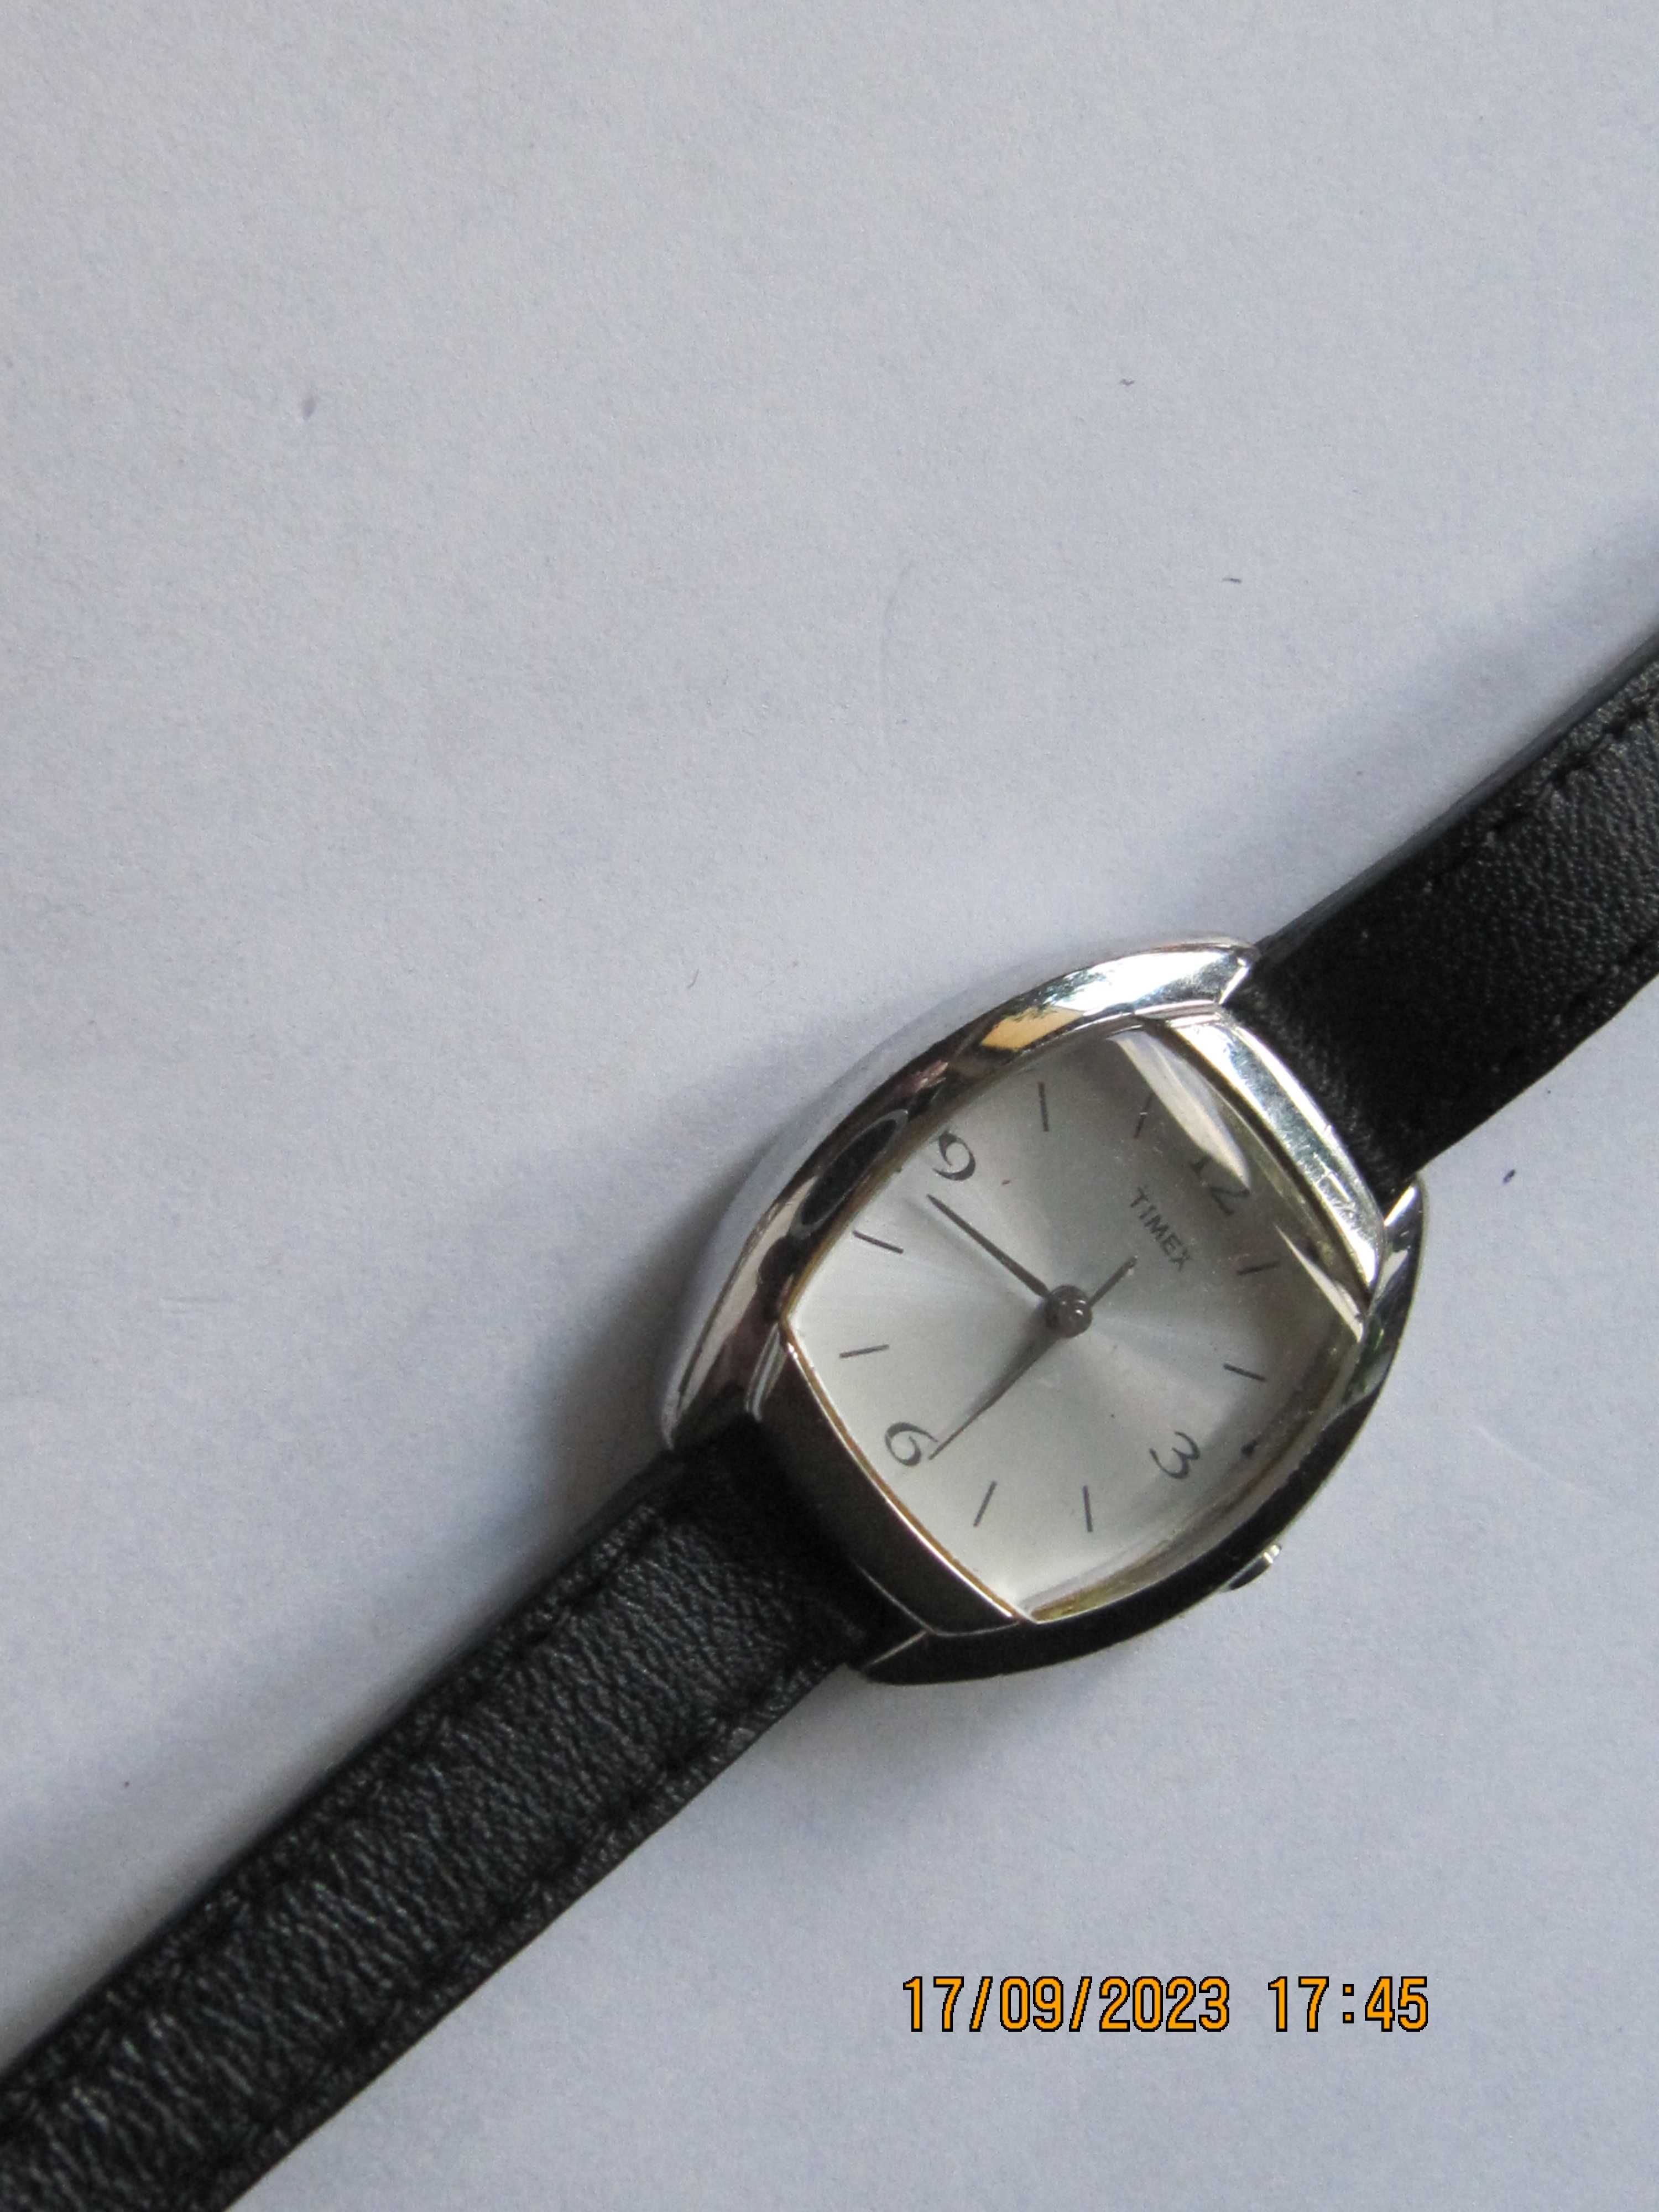 Timex quartz damski zegarek